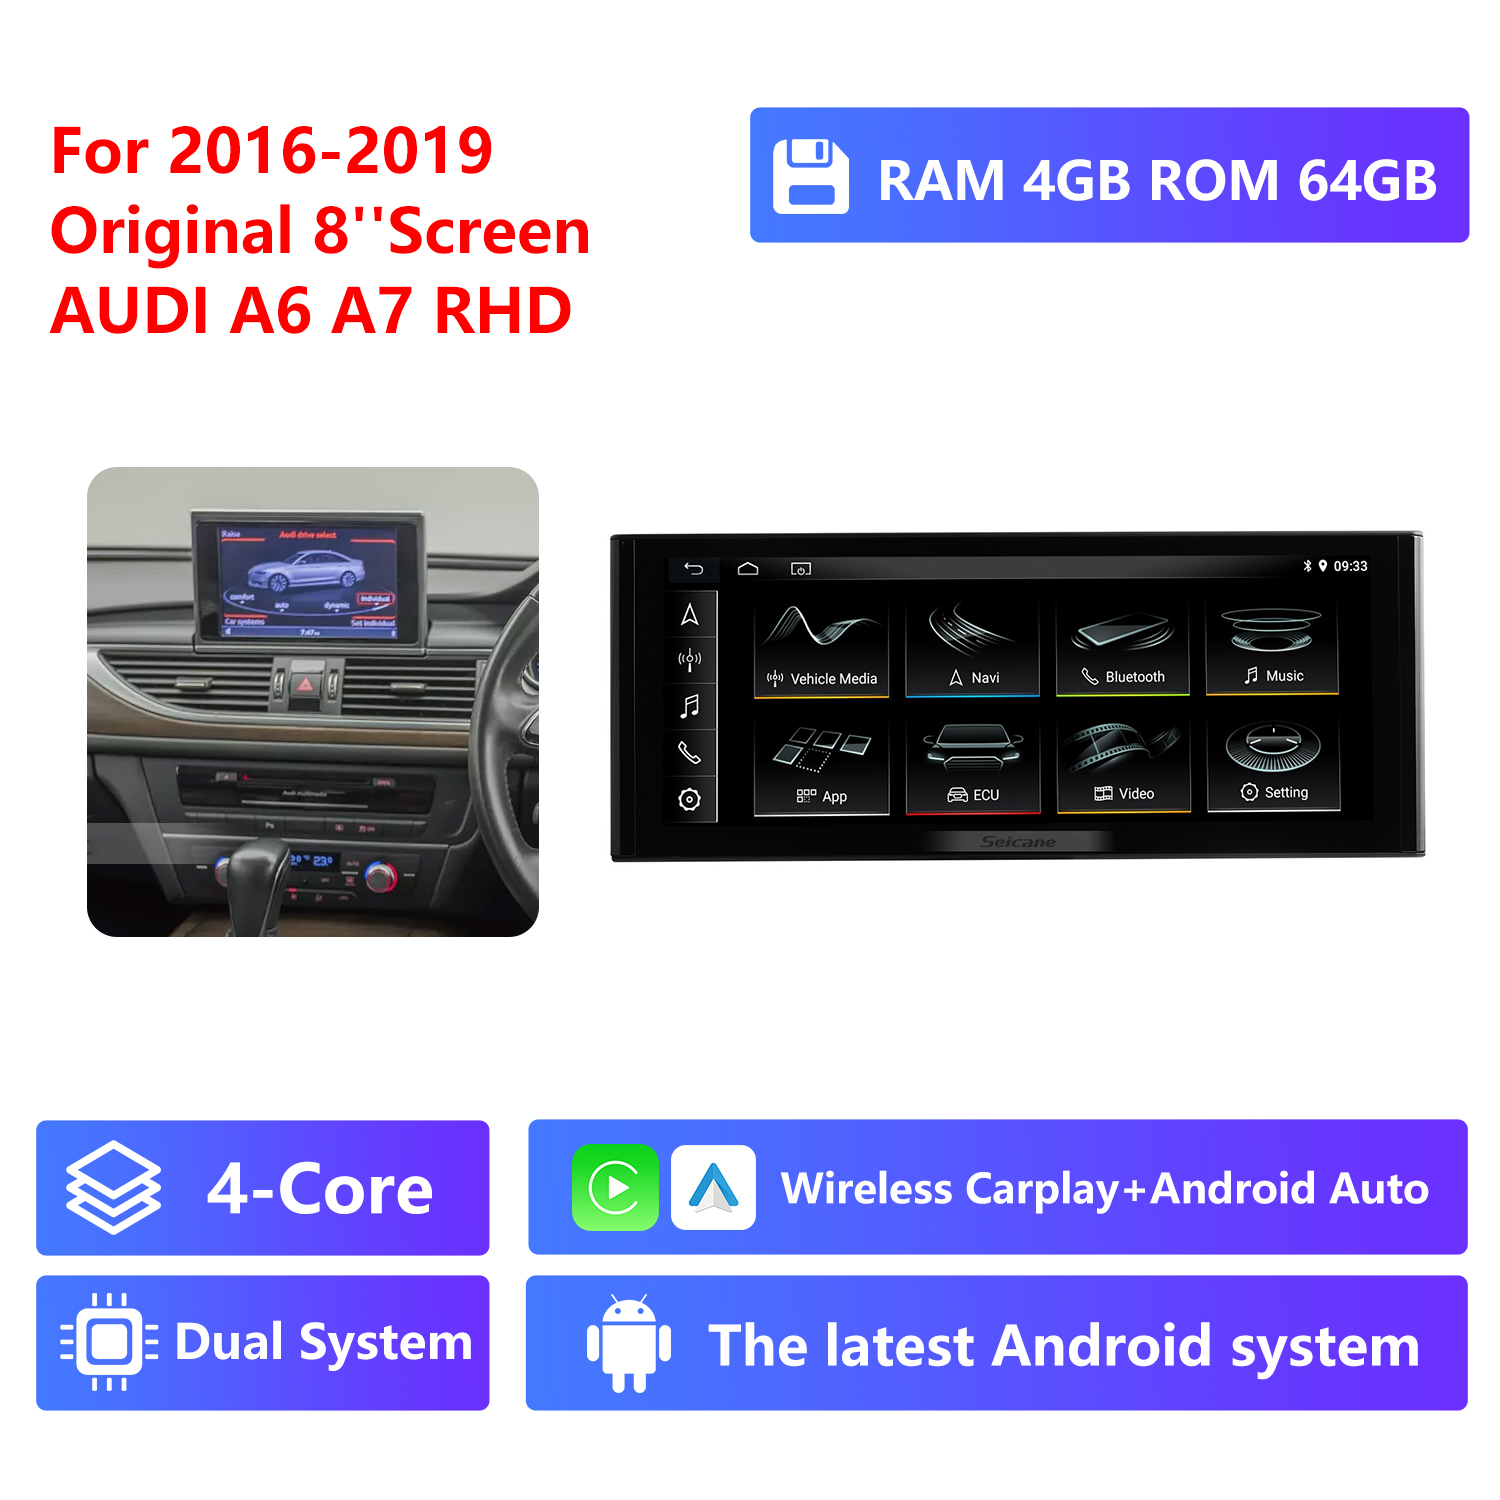 4-Core RAM 4G ROM 64G,2016-2019, Original 8"Screen,RHD